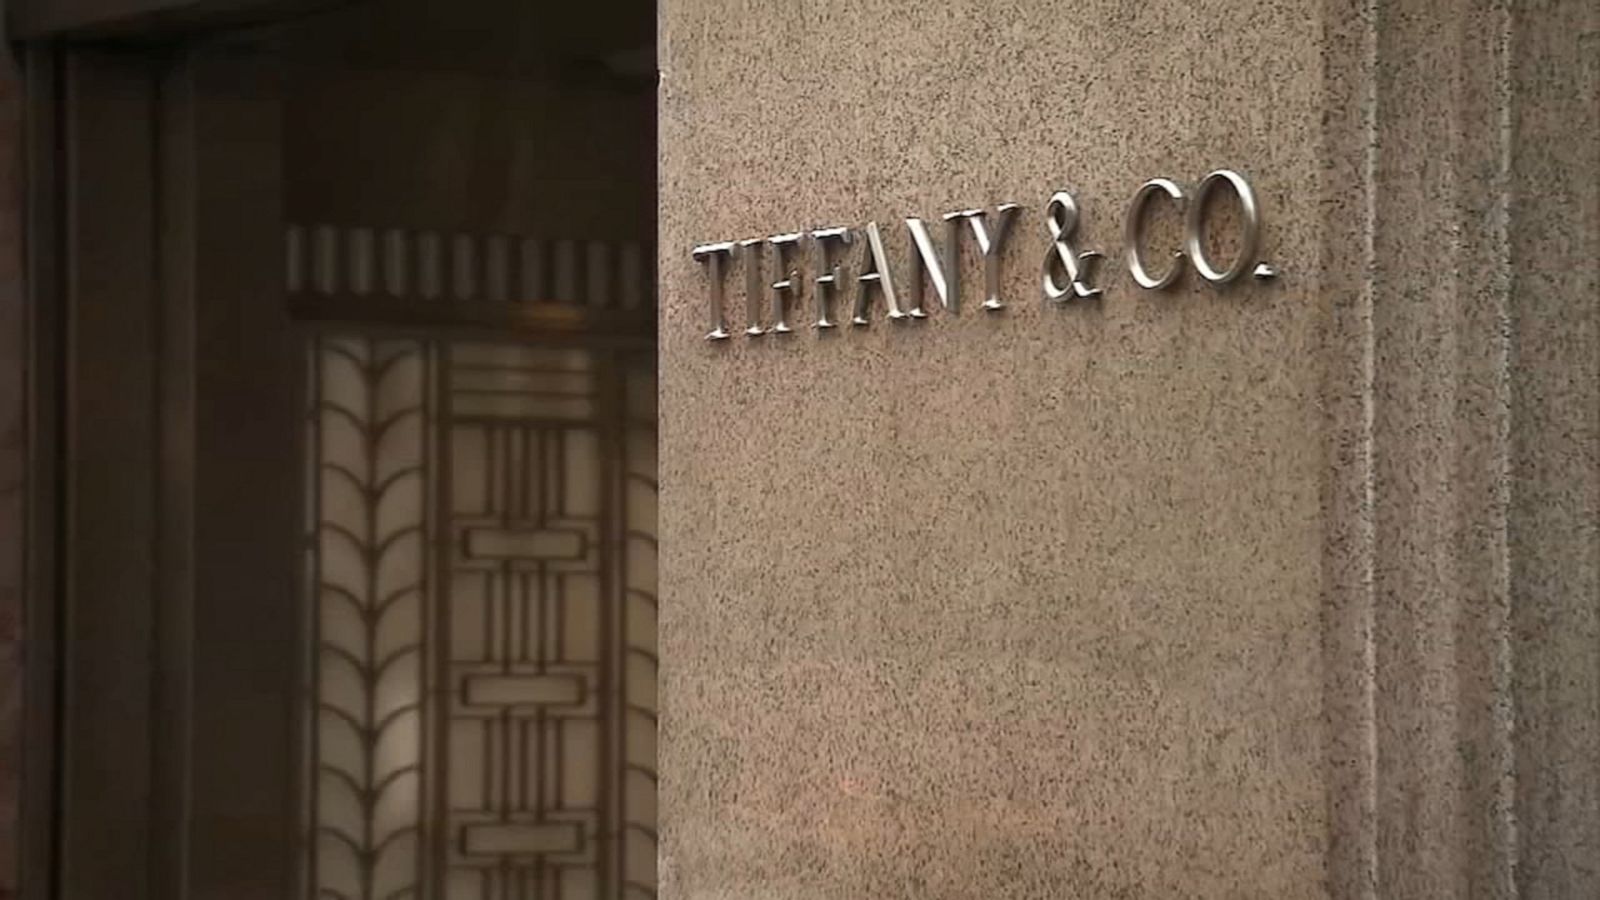 LVMH to buy Tiffany for $16.2 billion - Good Morning America